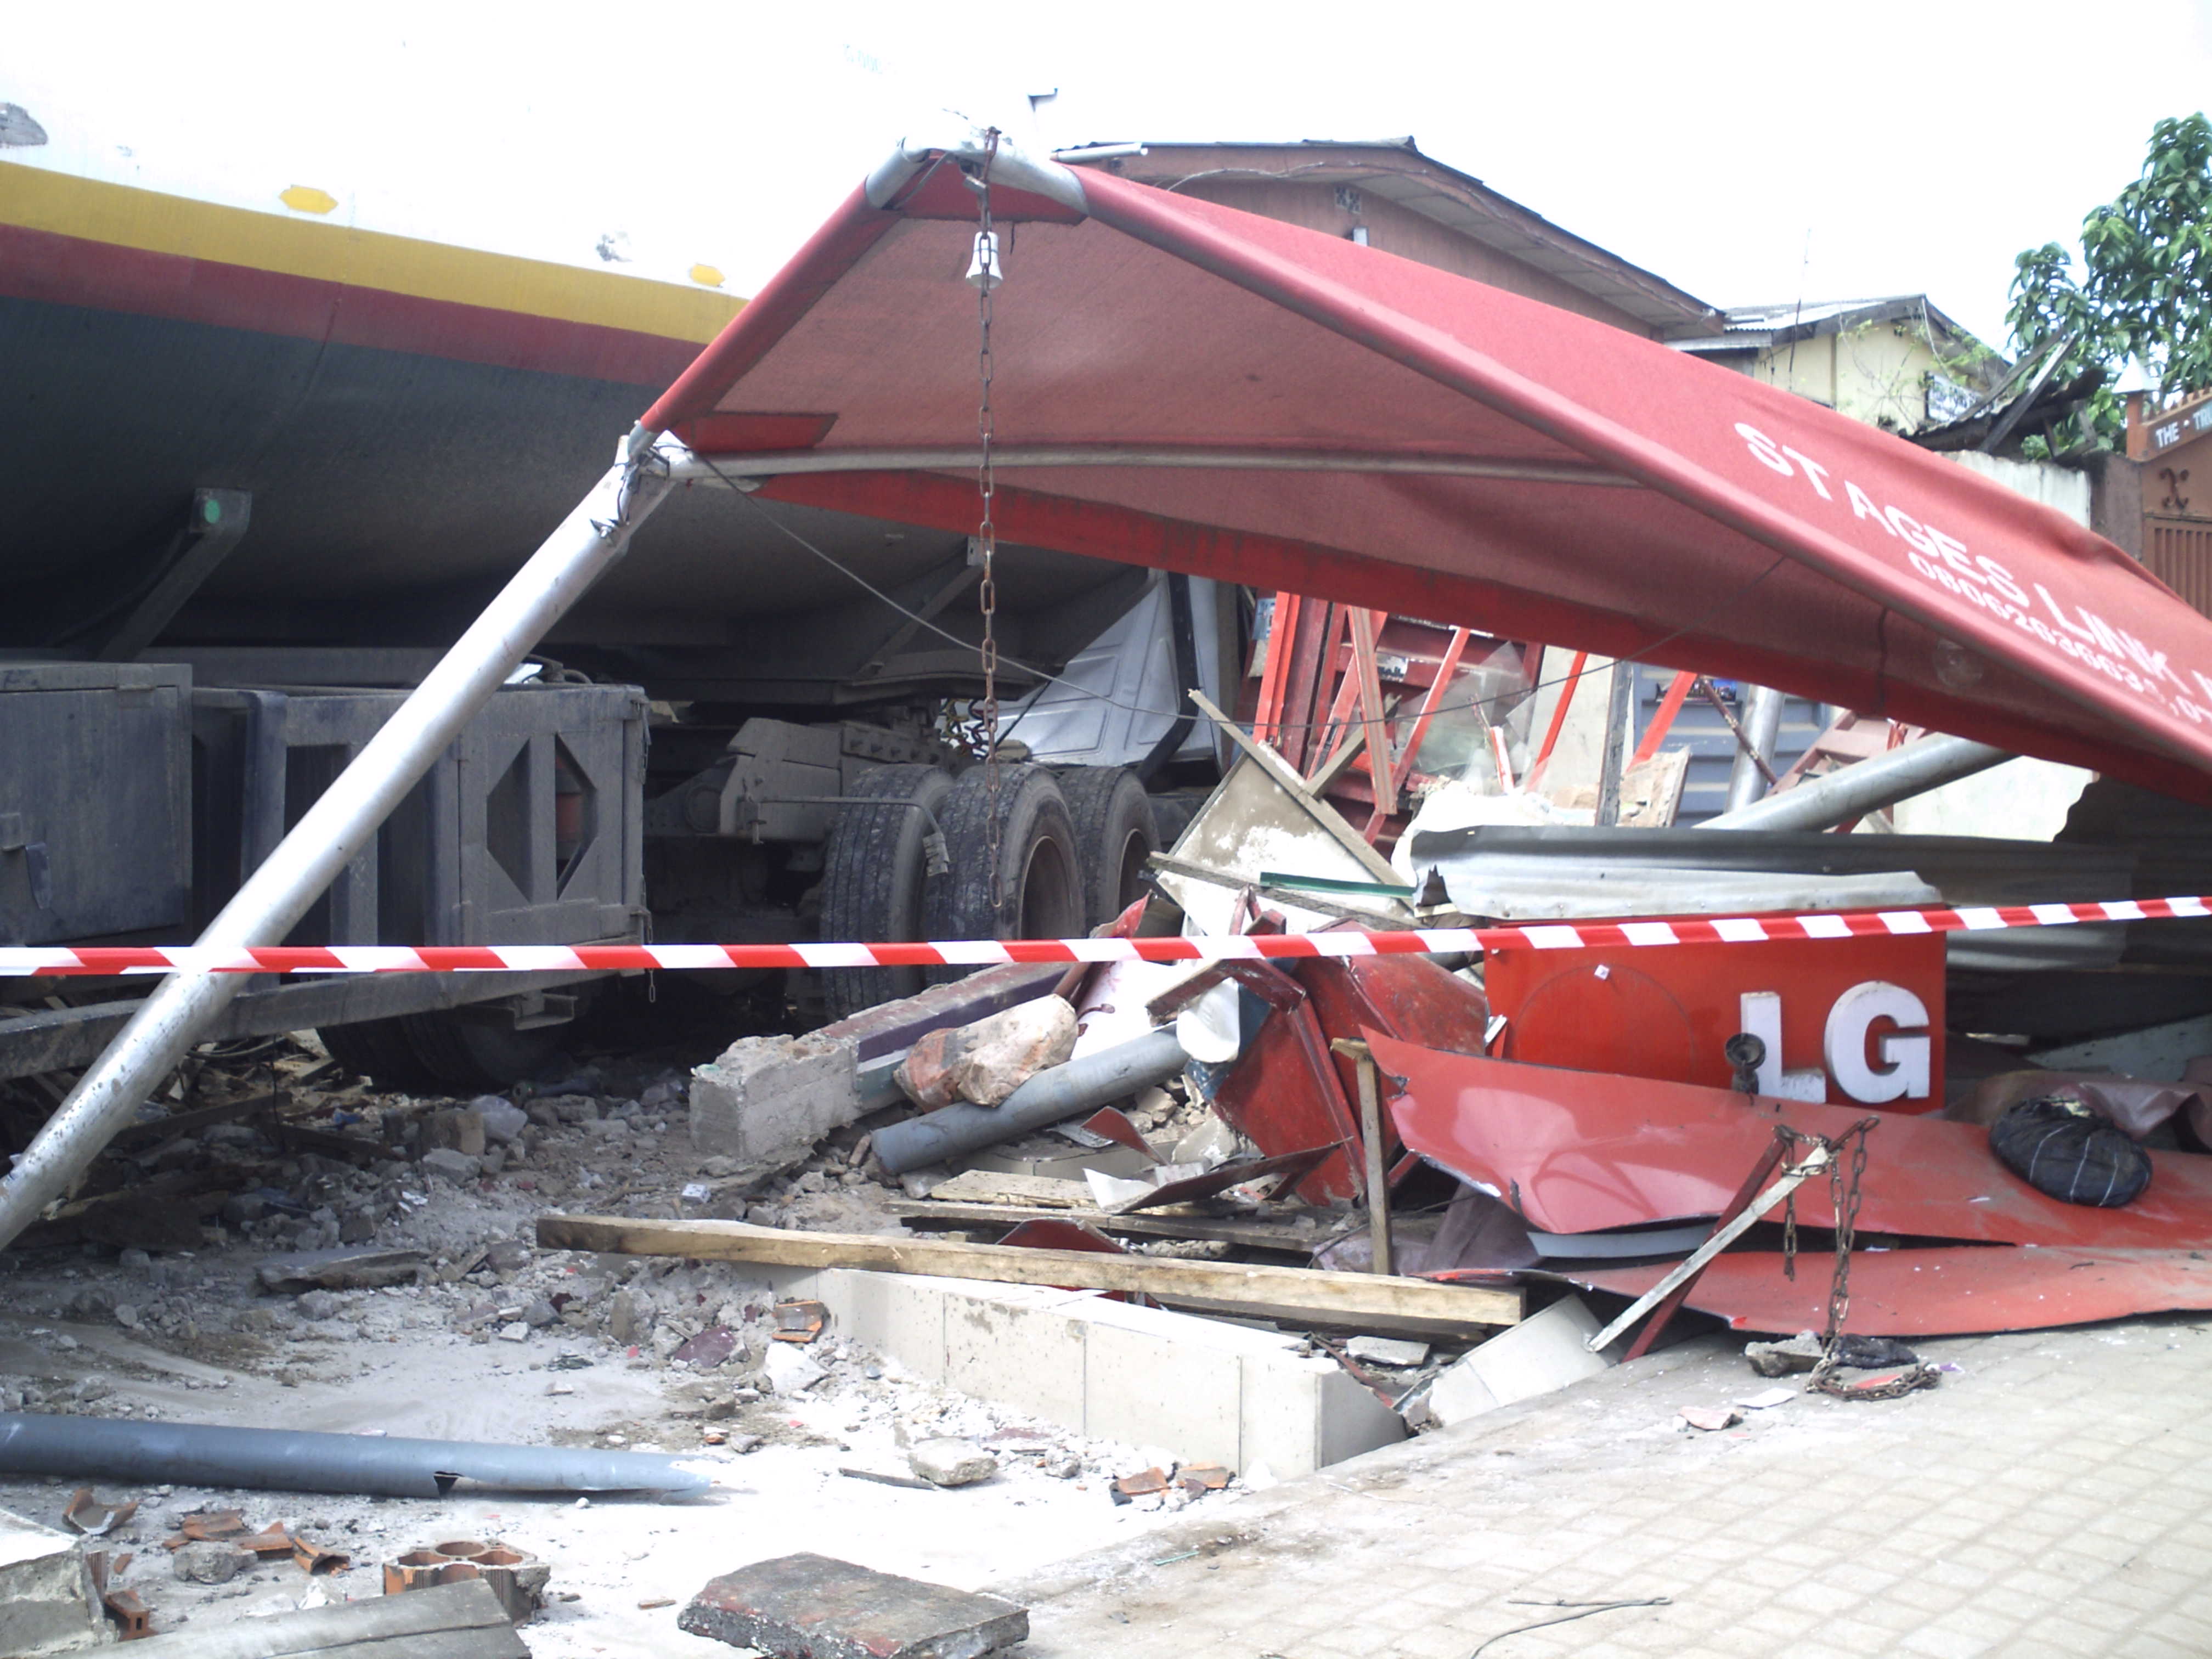 Scene of the accident (Photo: Ayo Olakotan/People&Power)